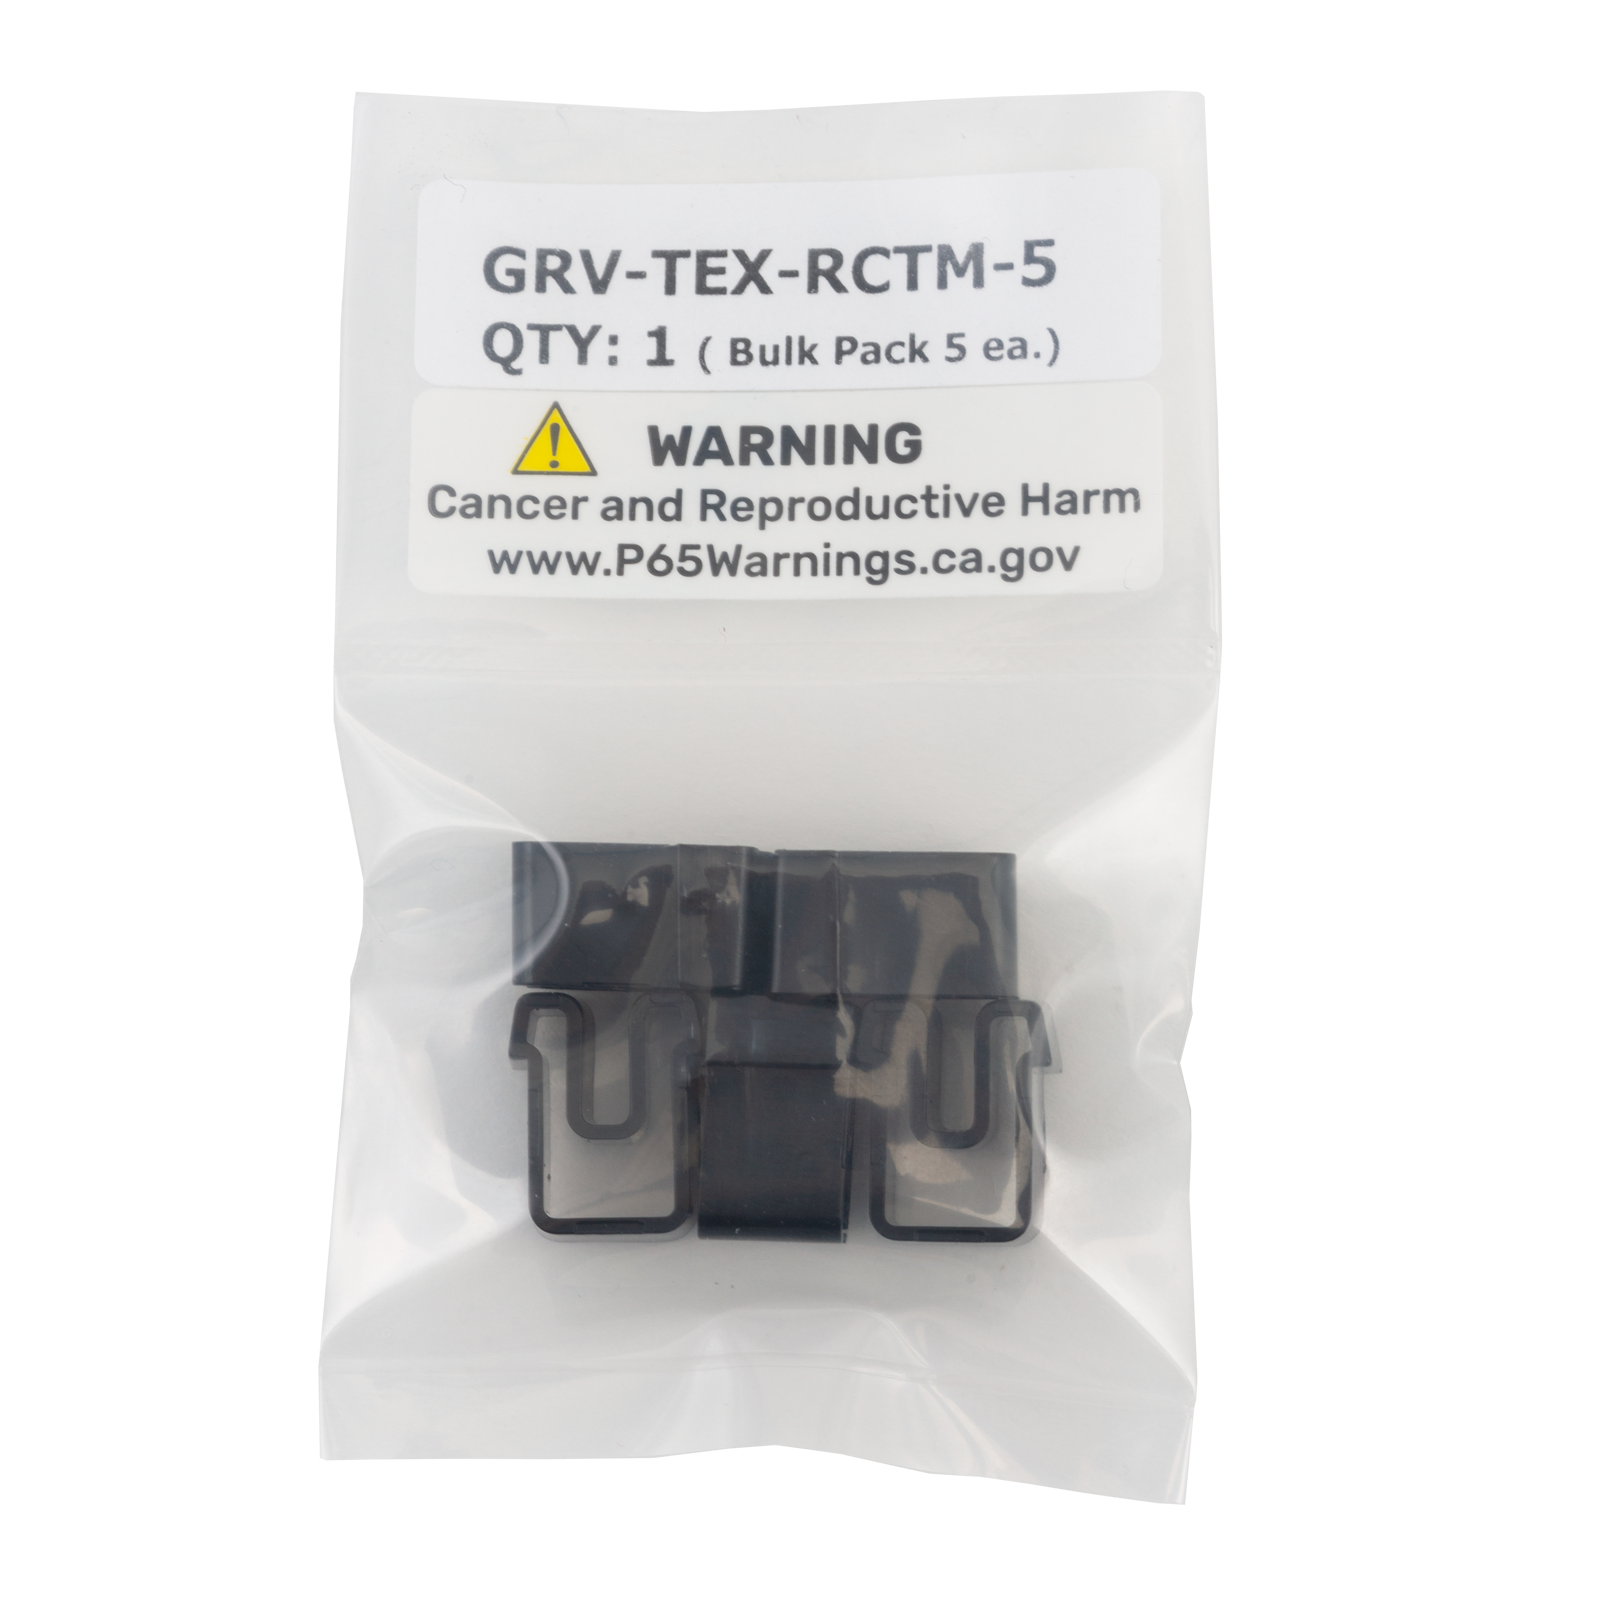 GRV-TEX-RCTM-5